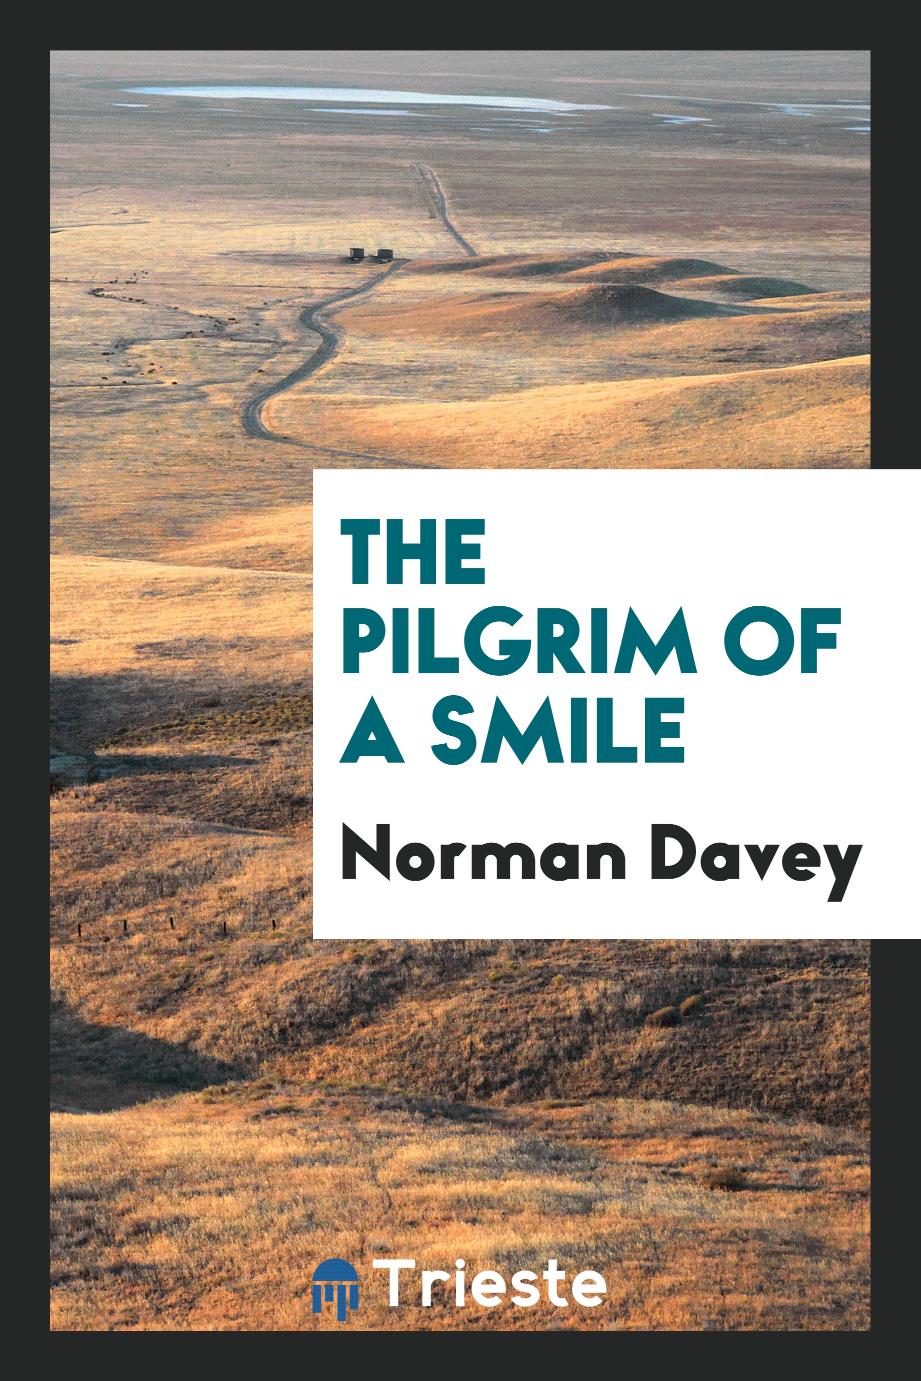 The pilgrim of a smile